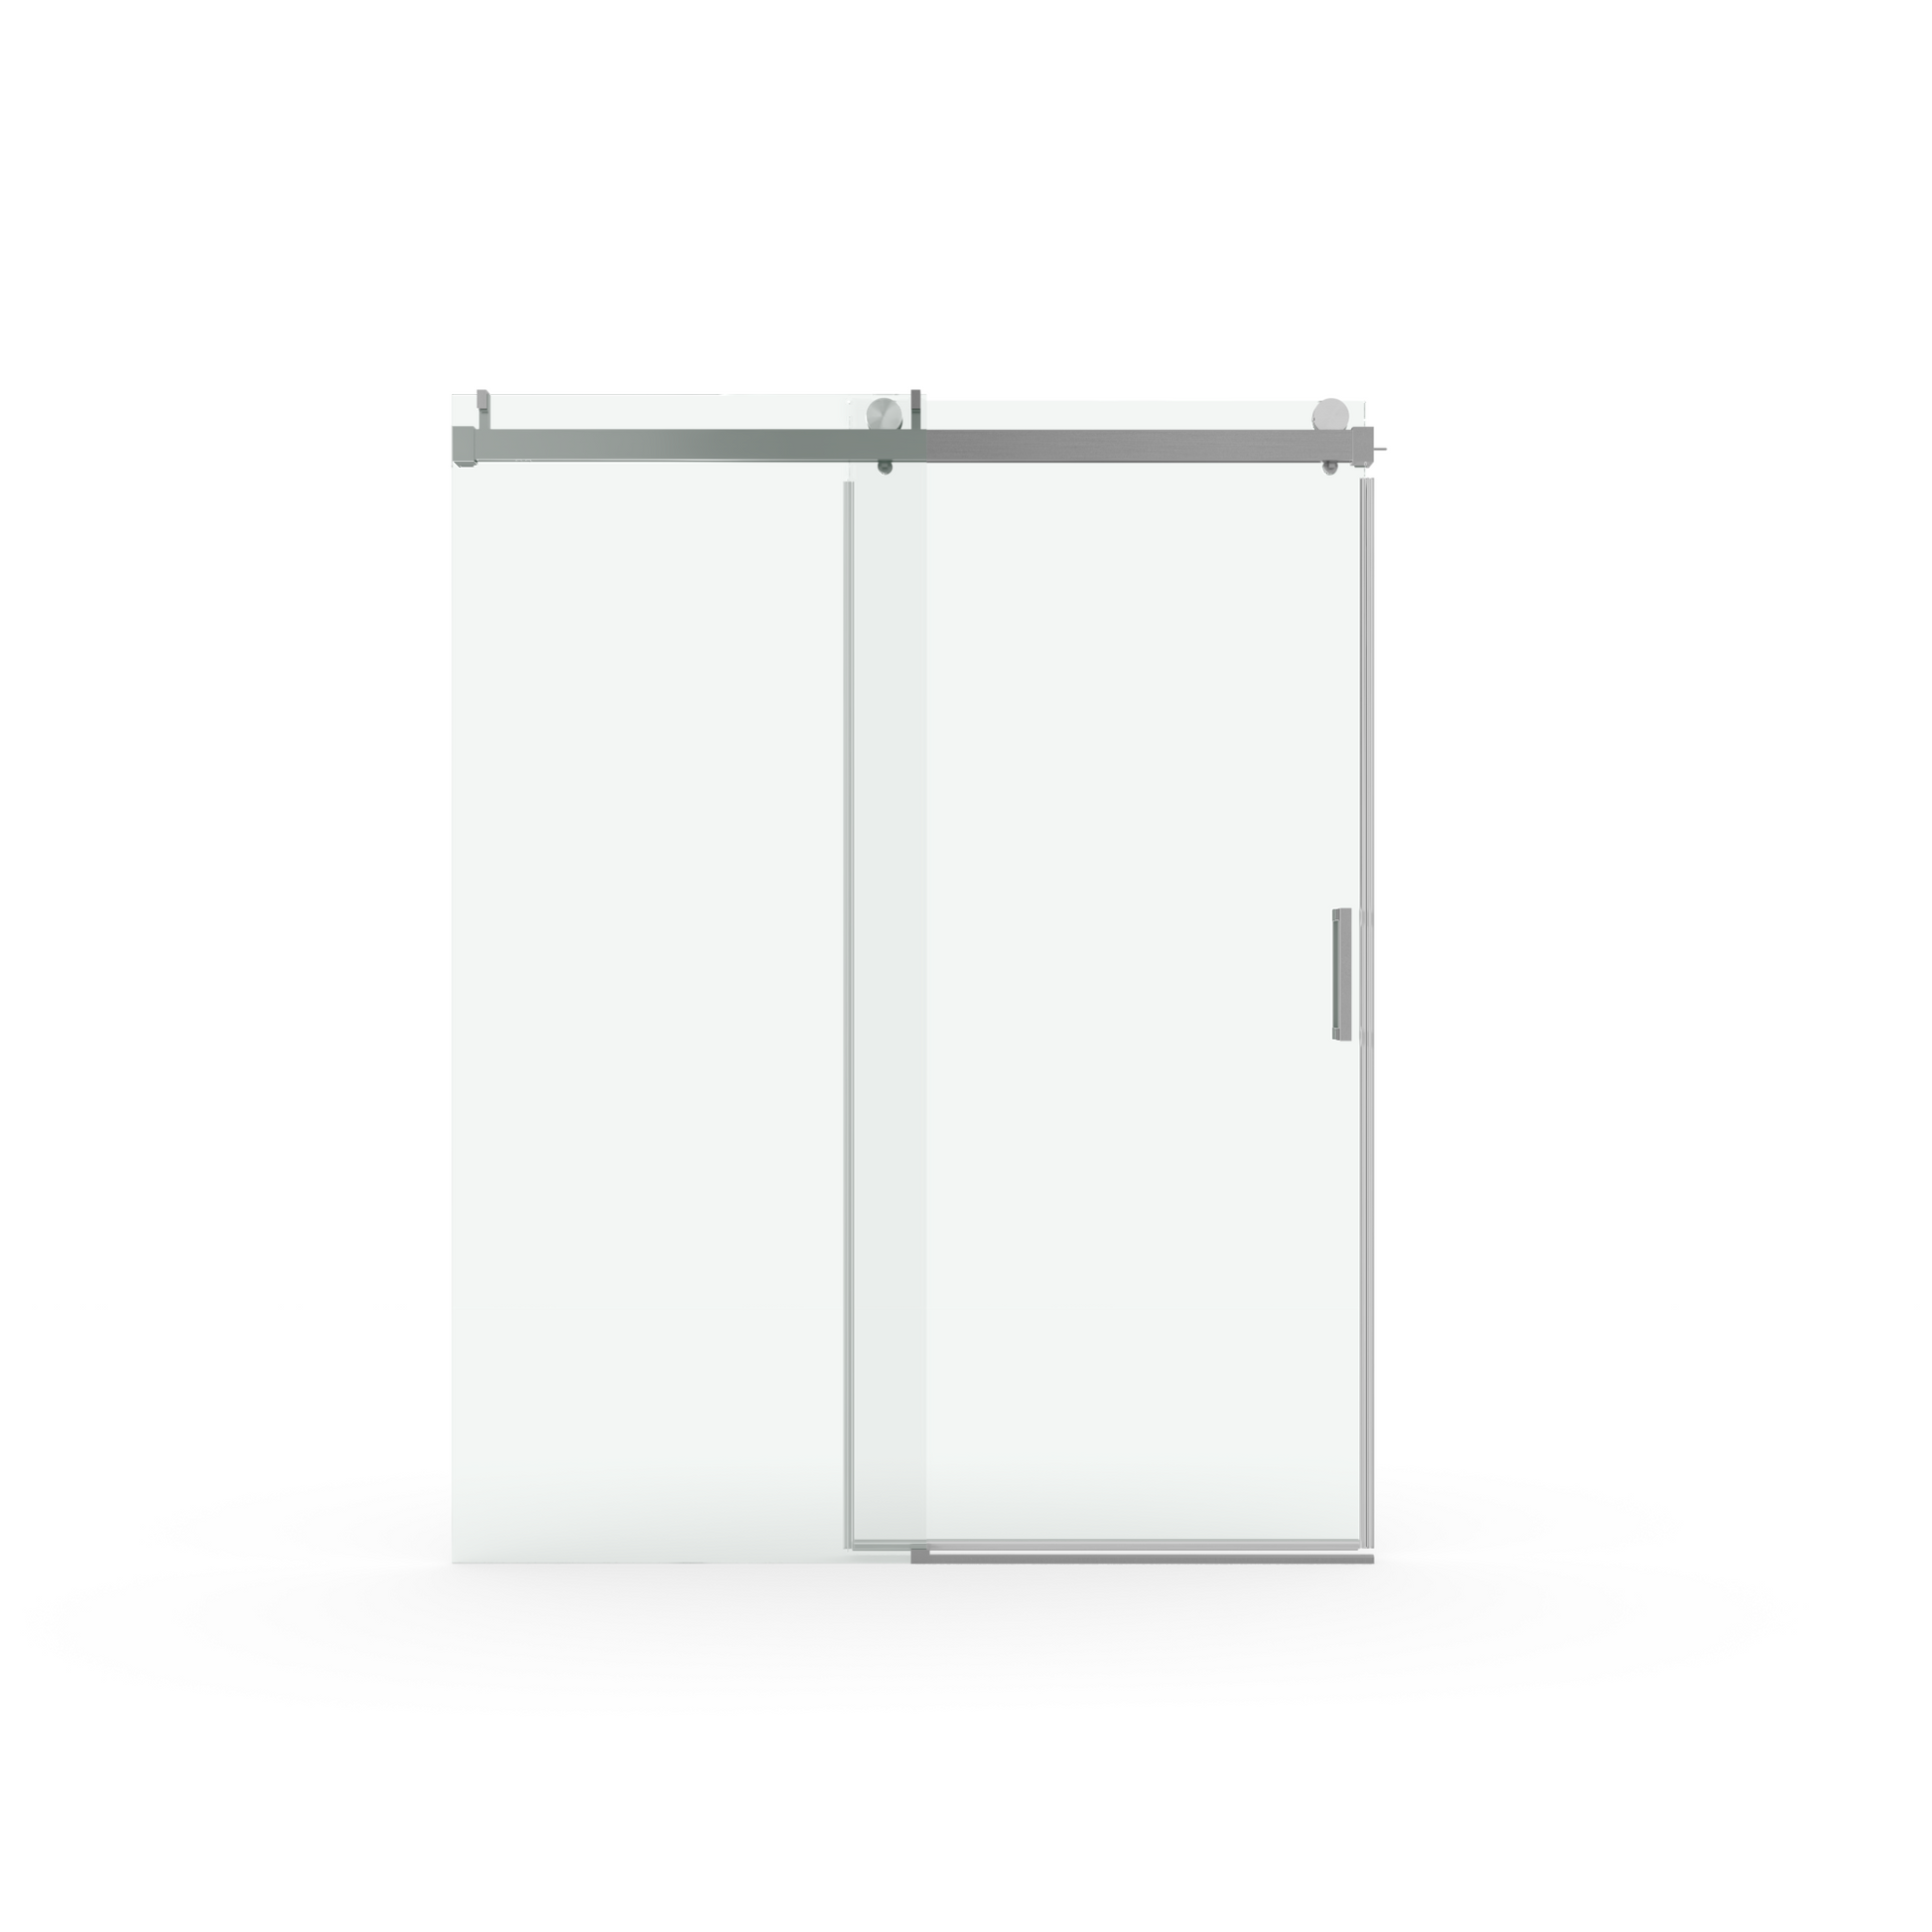 56" 60" W x 76" H Frameless Soft closing Single brushed nickel-bathroom-tempered glass